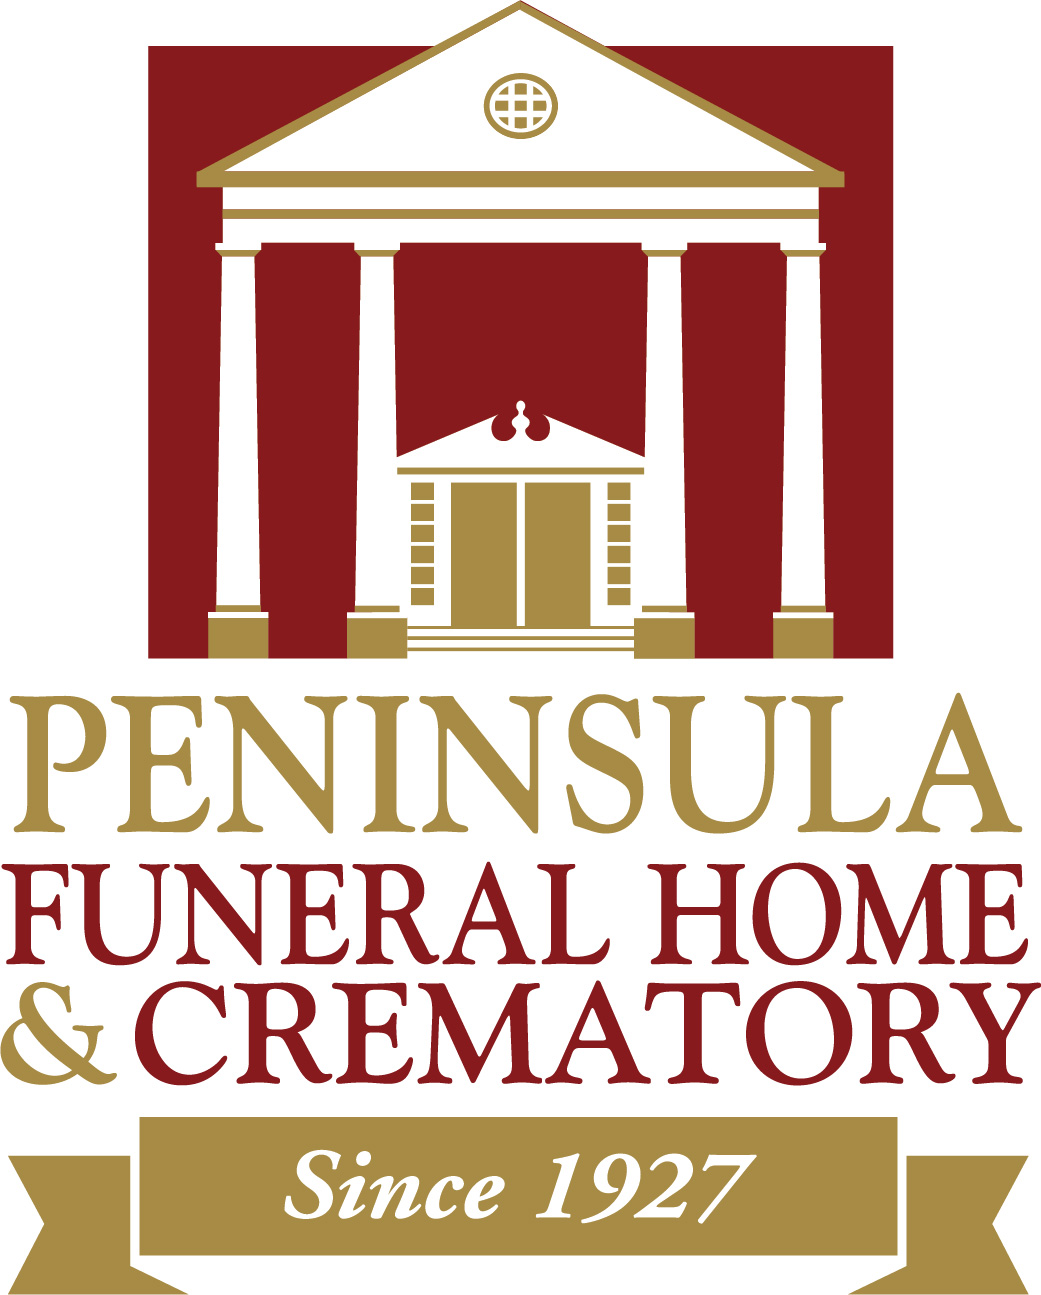 Peninsula Funeral Home